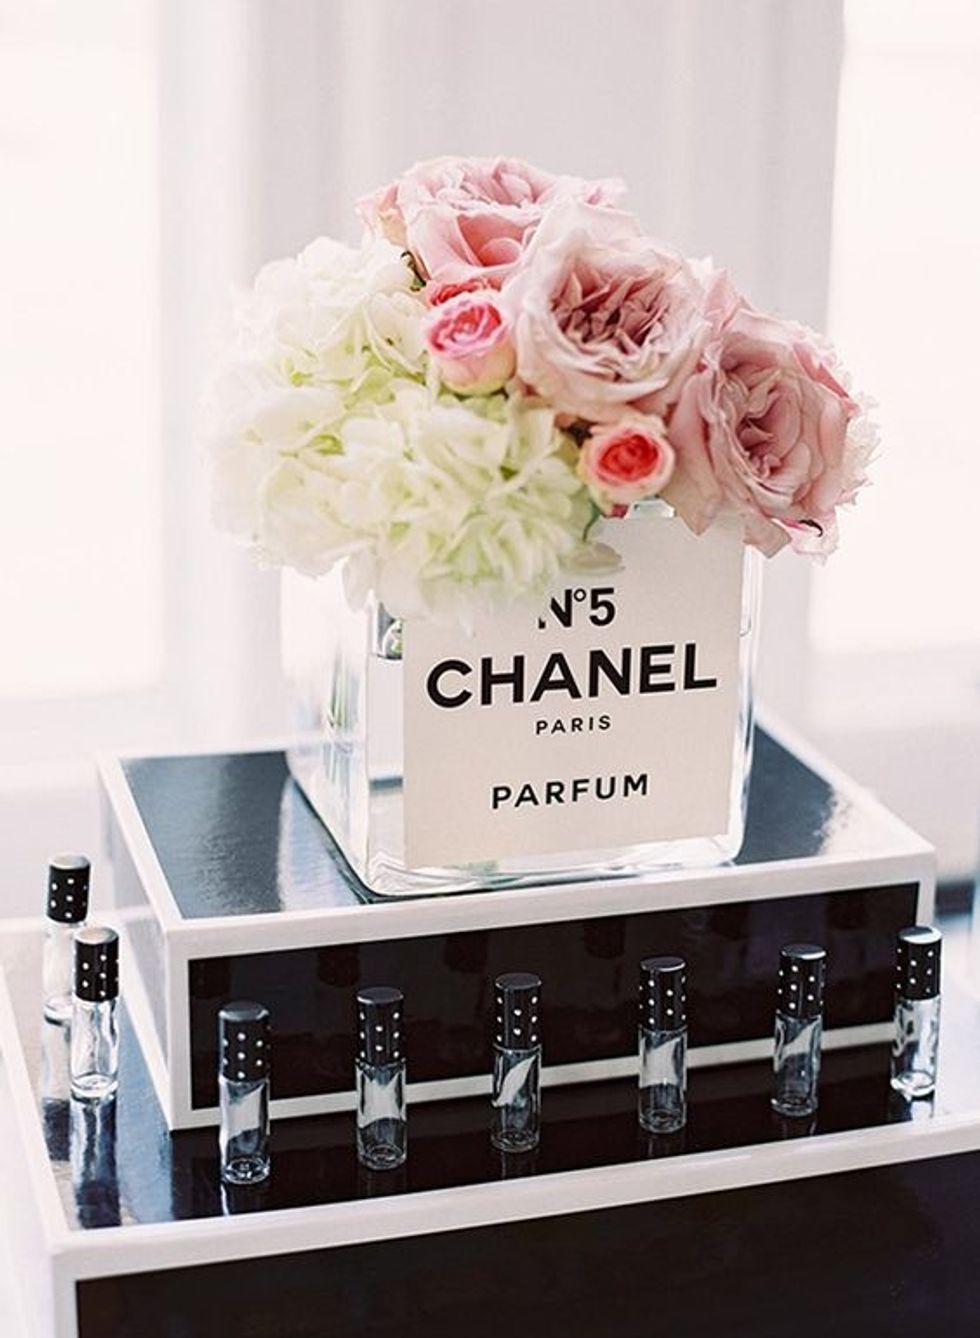 chanel perfume inspired decor for bridal shower